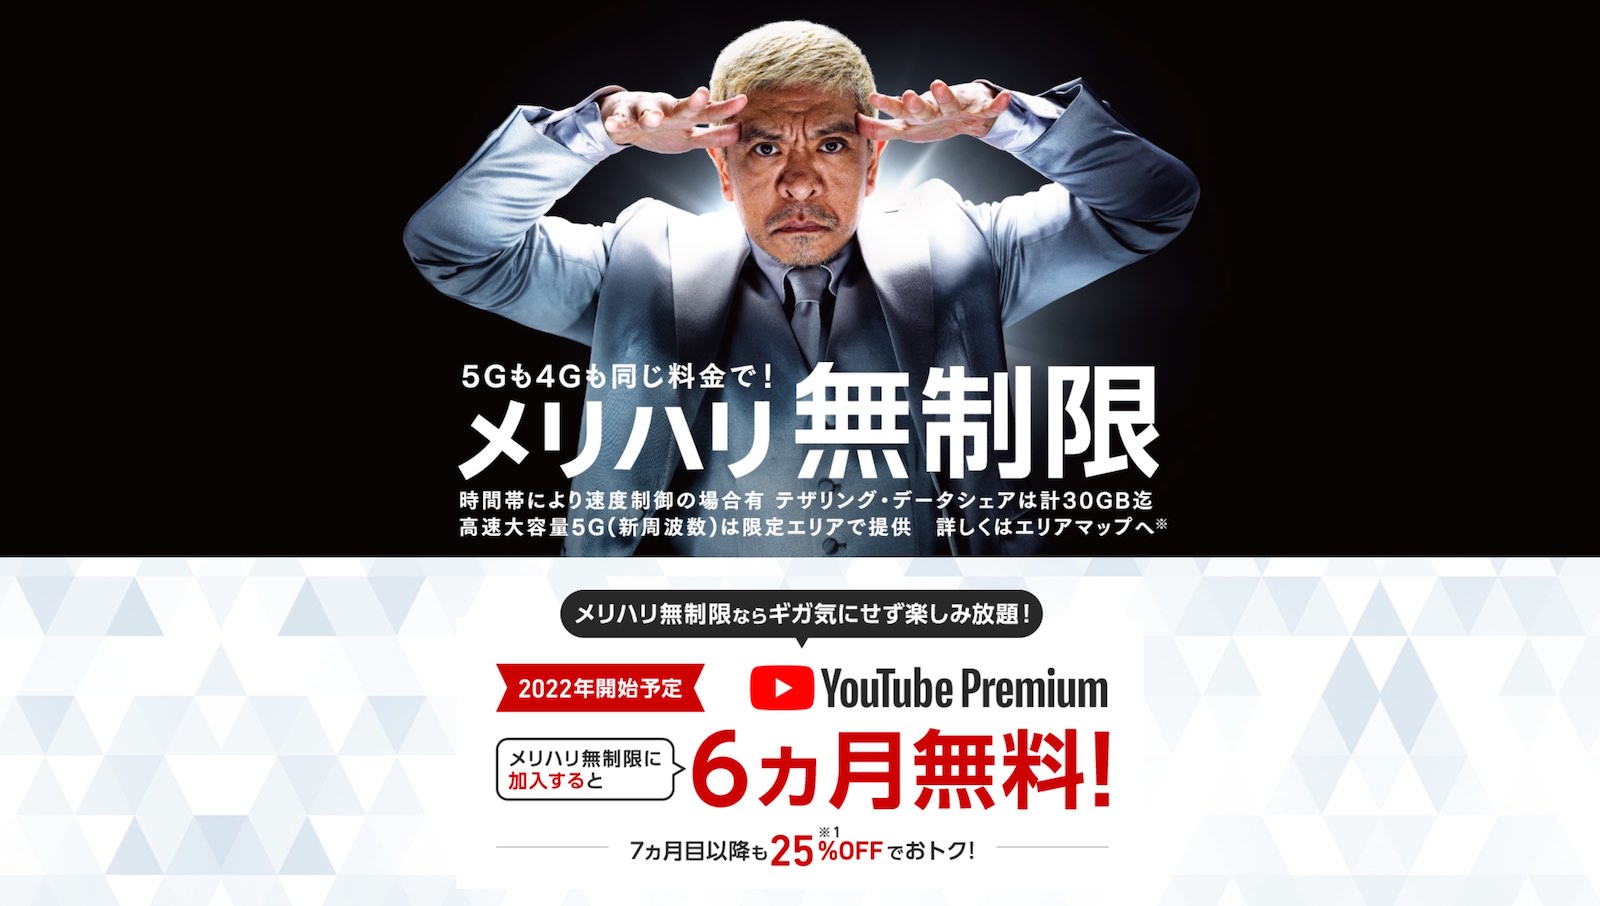 YouTube Premium merihari unlimited softbank